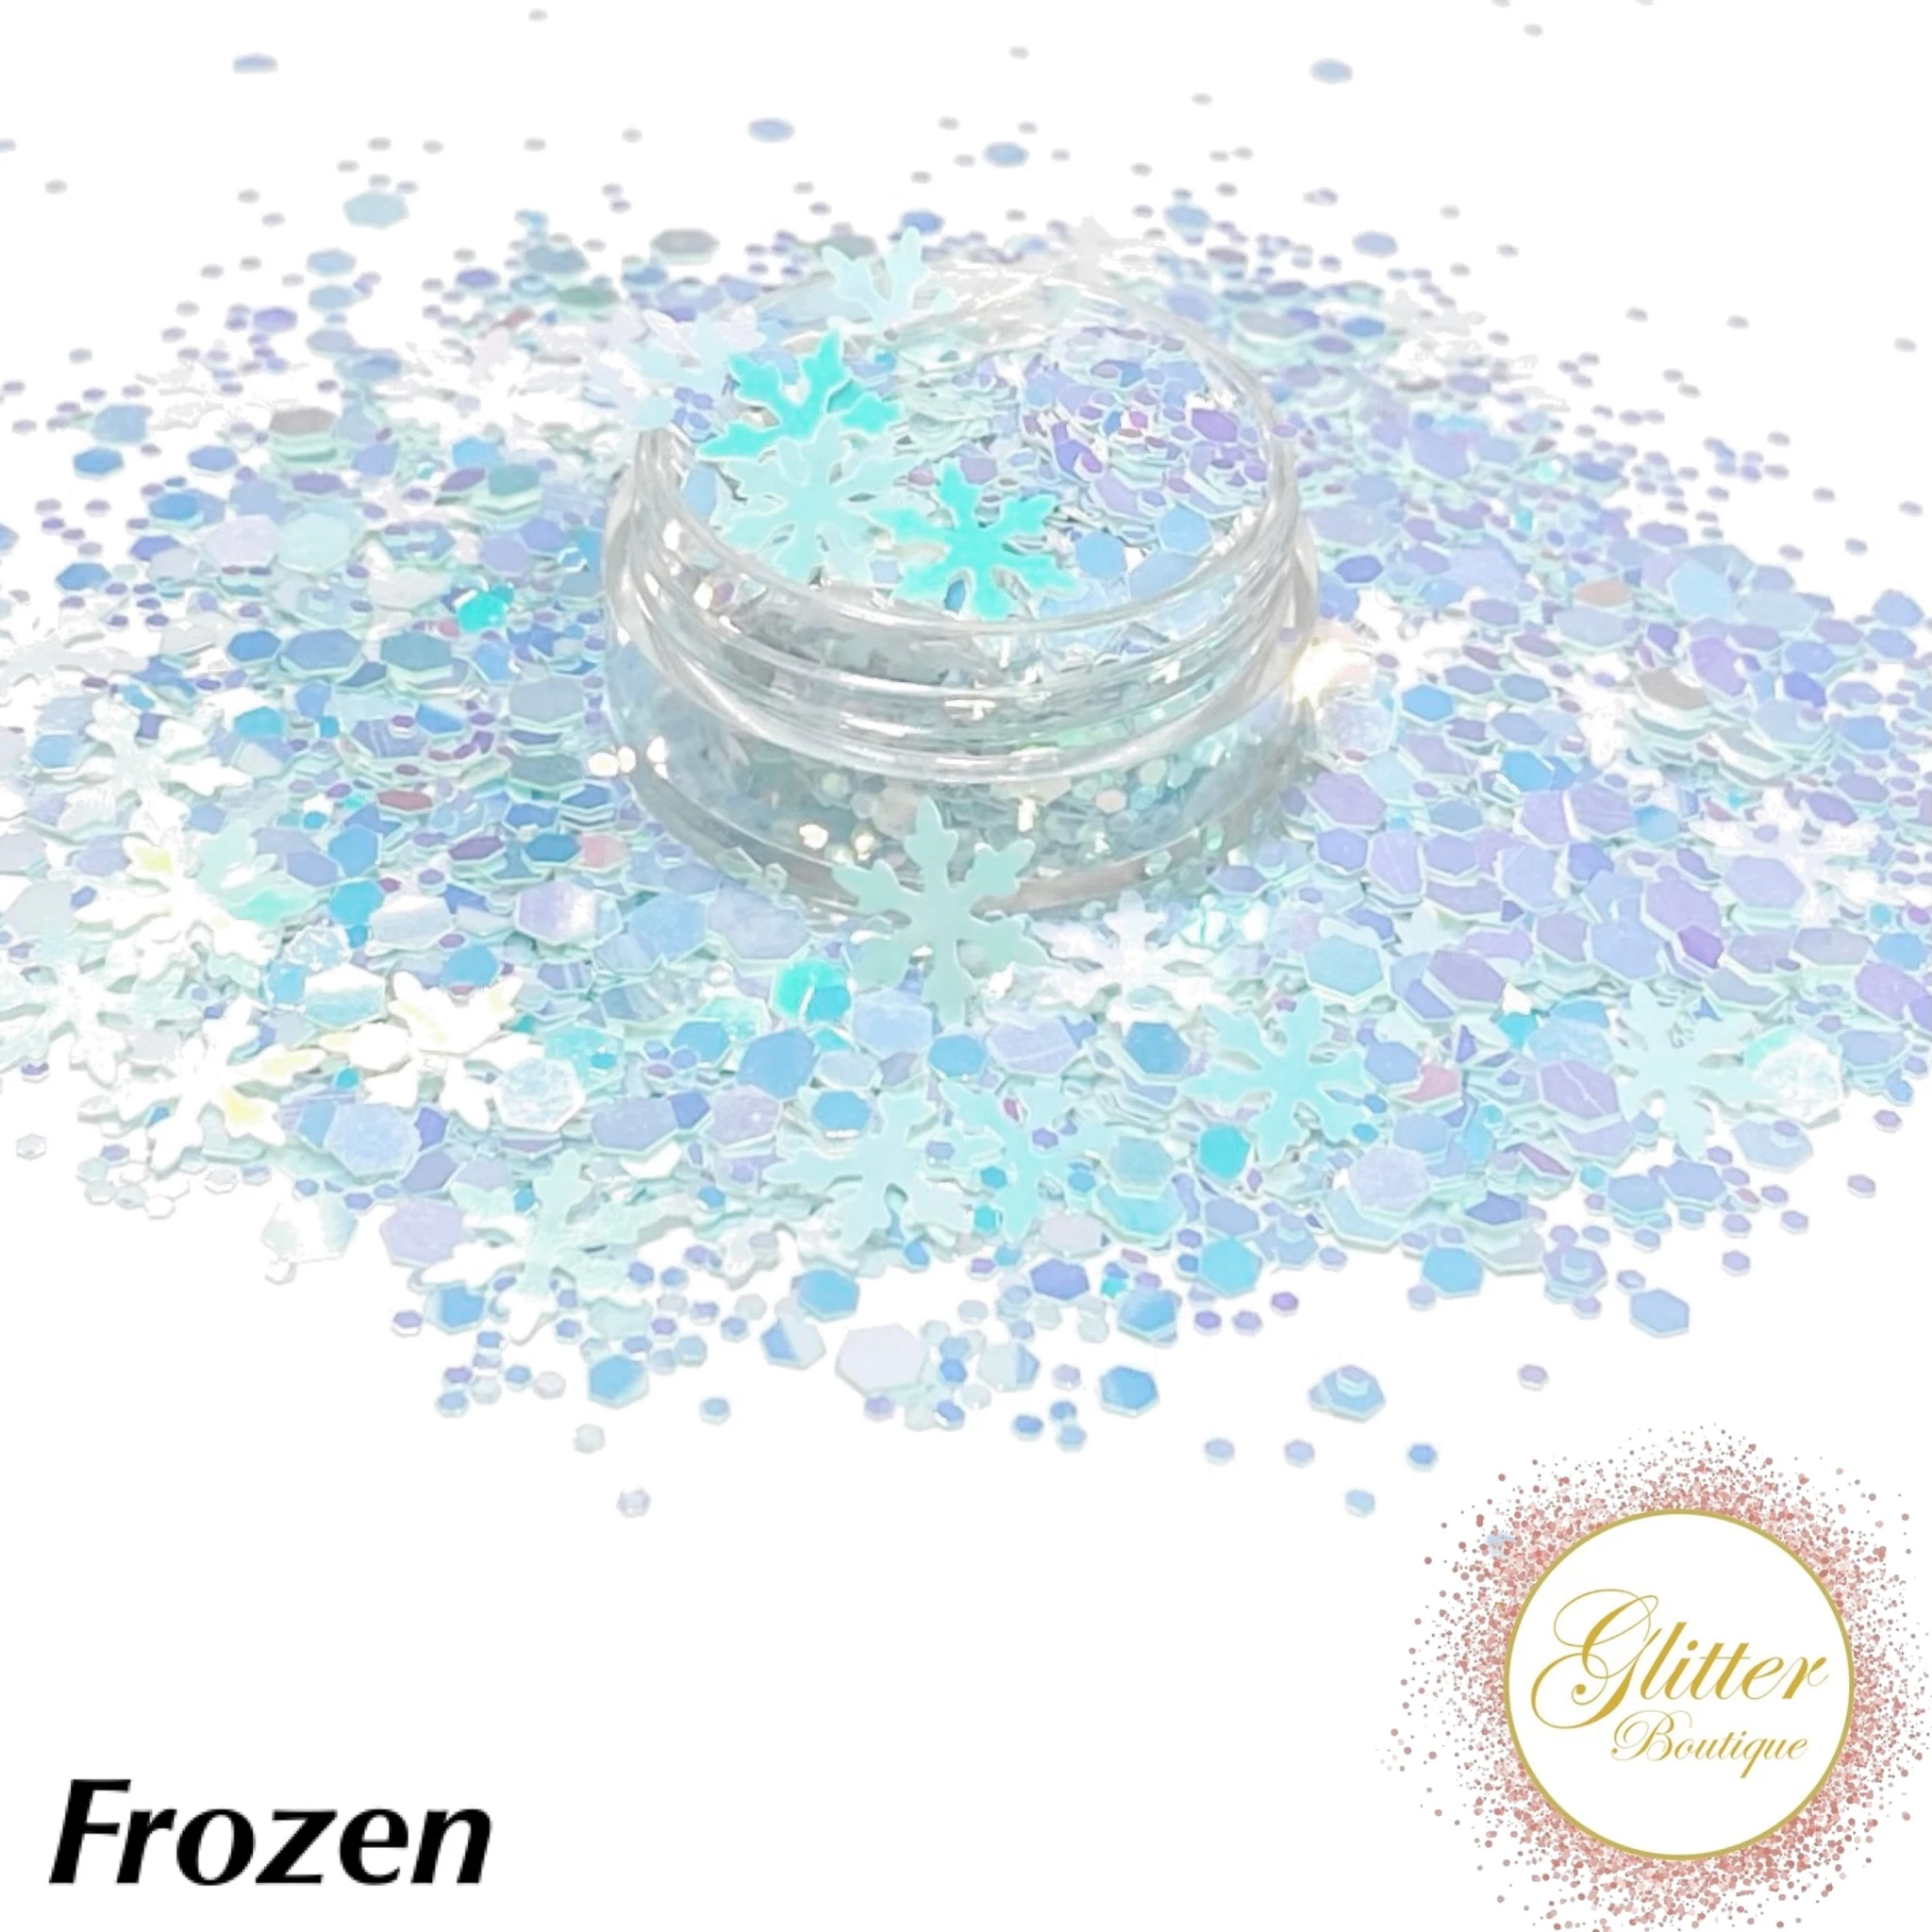 Glitter Boutique - Frozen - Creata Beauty - Professional Beauty Products